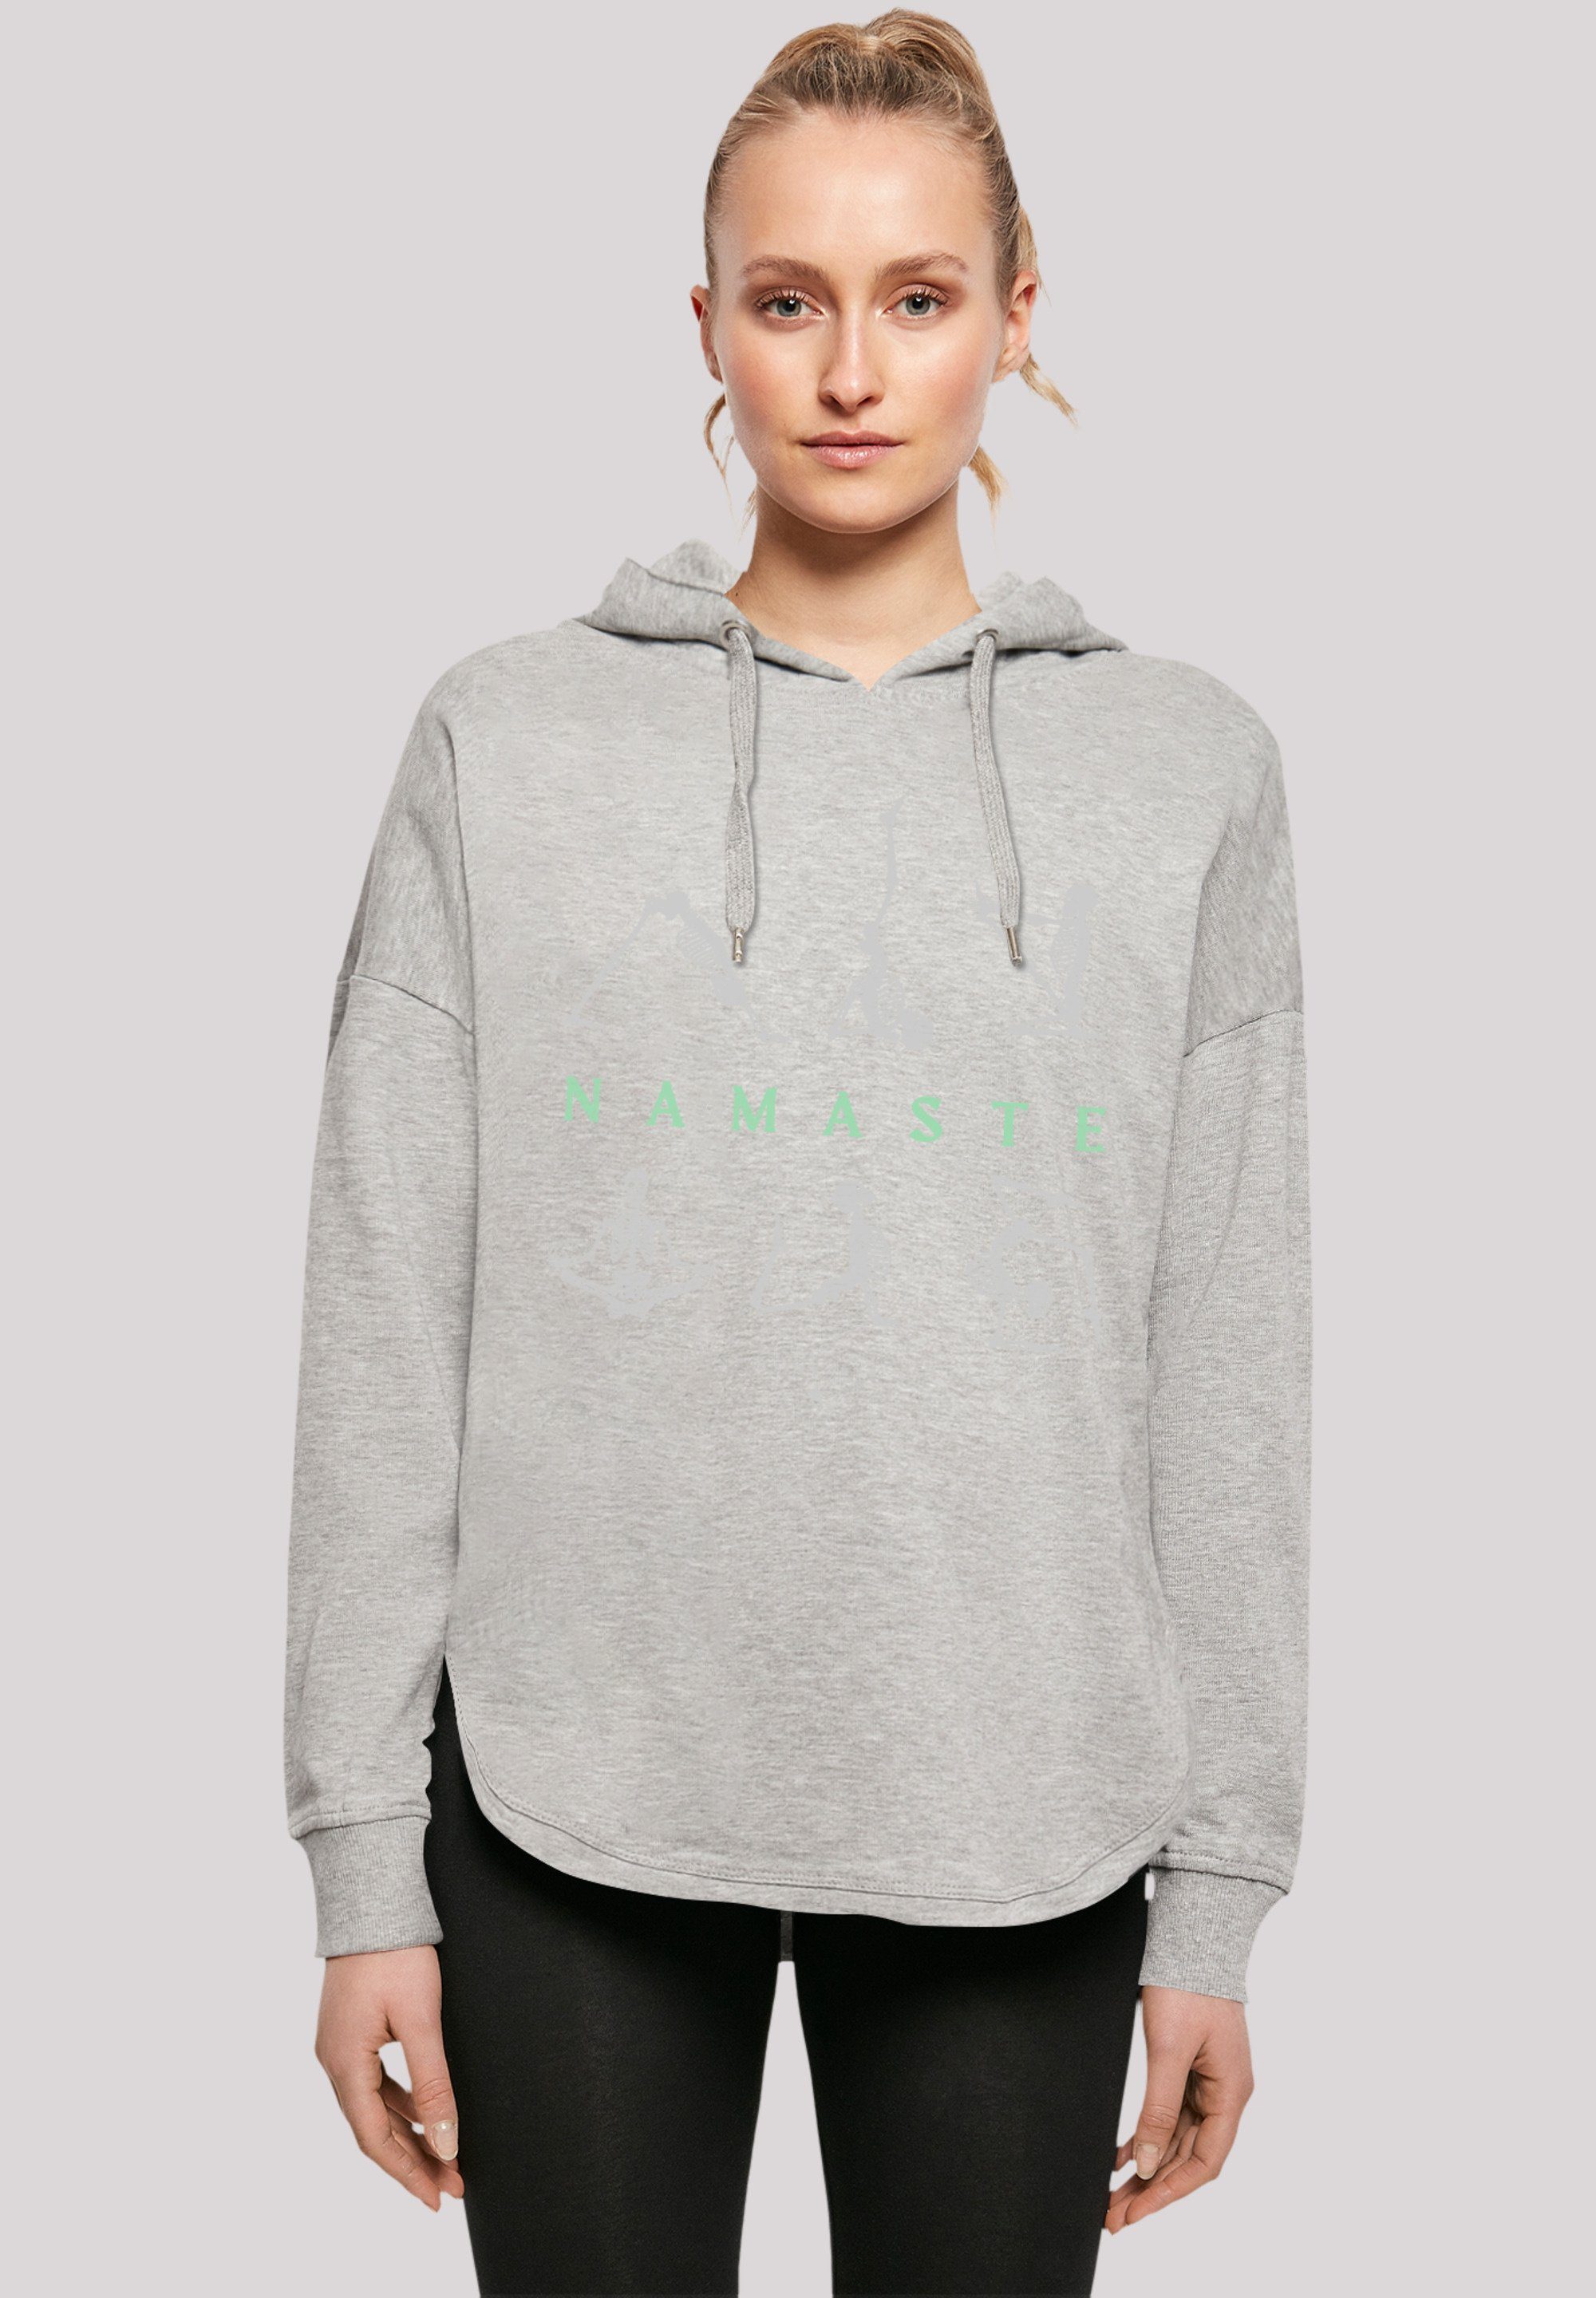 F4NT4STIC Sweatshirt Namaste Yoga Skelett Halloween Print grey | Sweatshirts